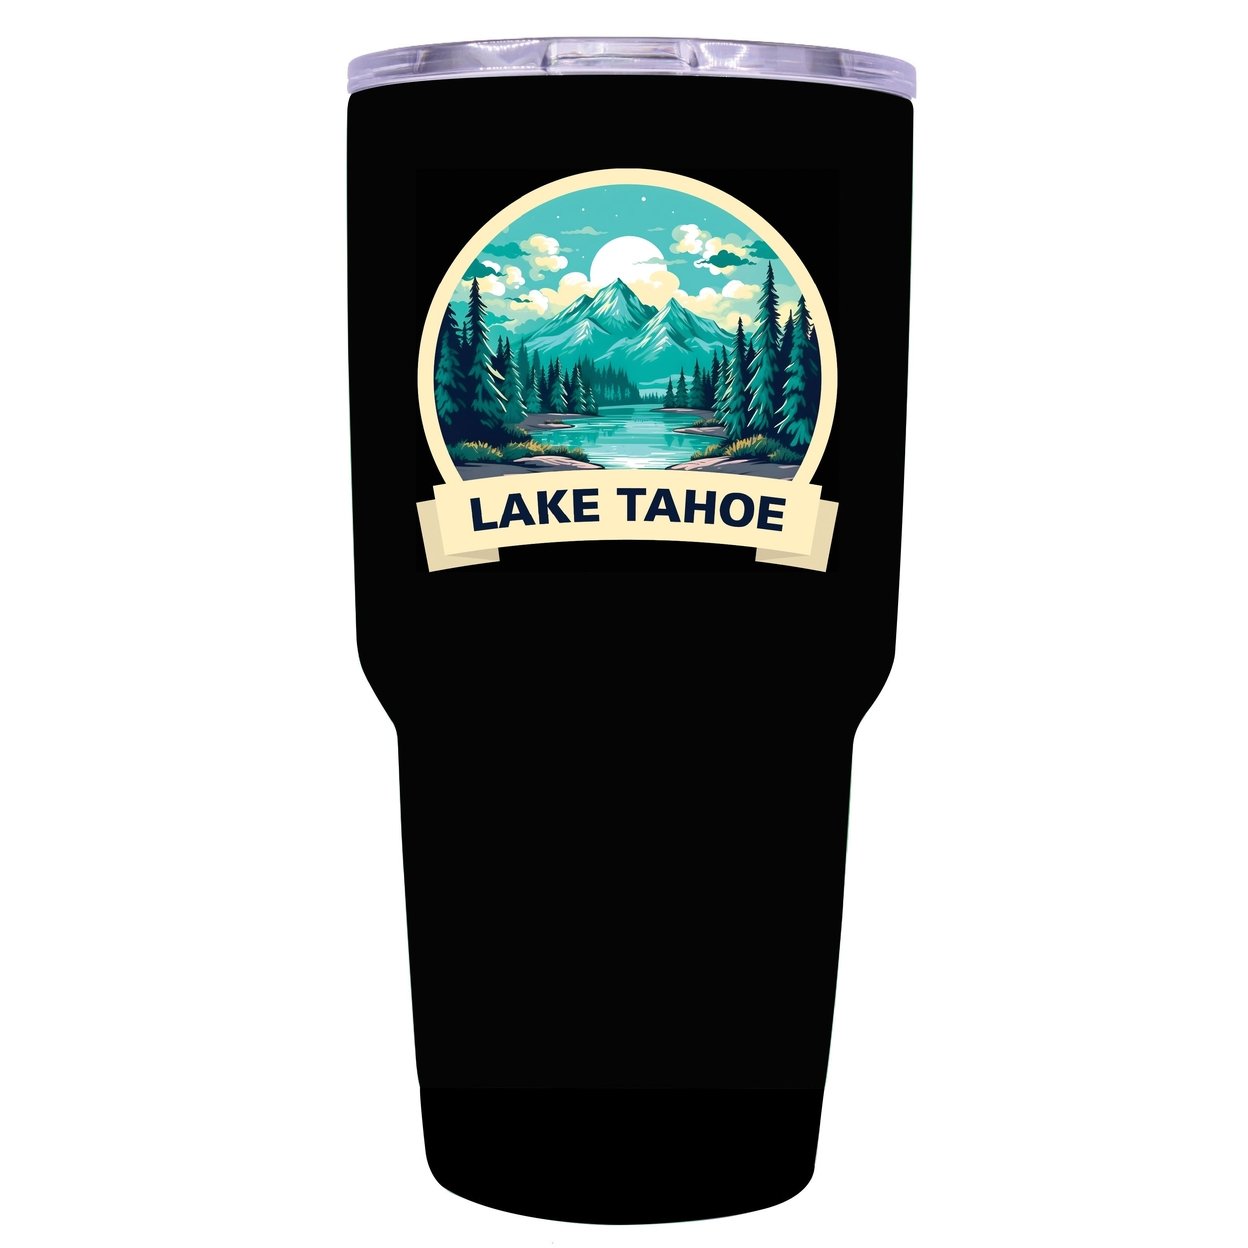 Lake Tahoe California Souvenir 24 Oz Insulated Stainless Steel Tumbler - Black,,4-Pack